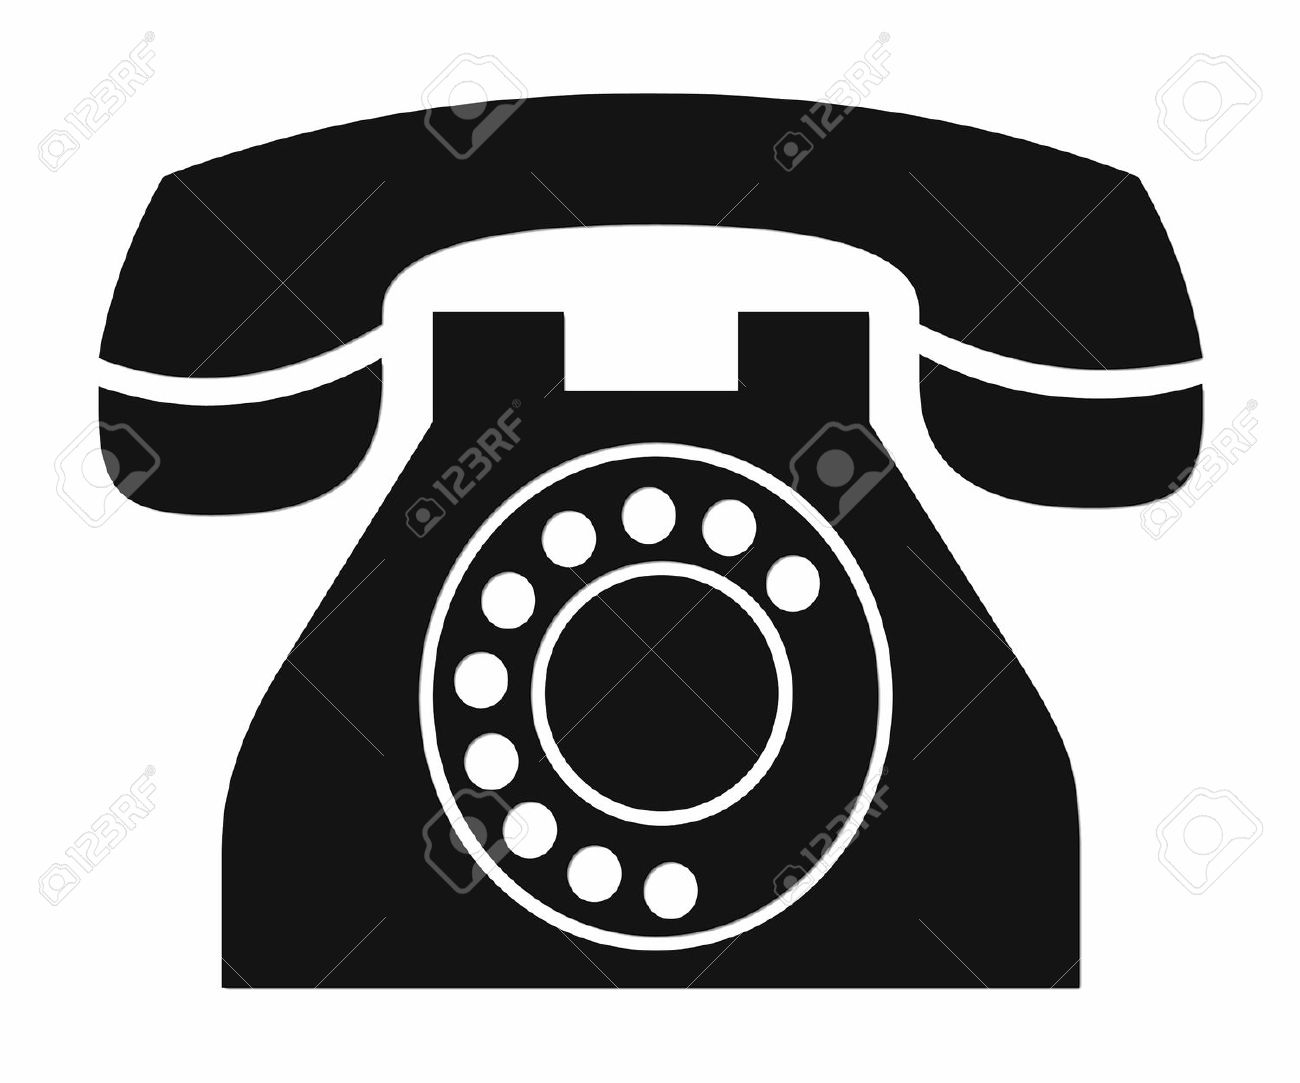 phone clipart - Clipart Telephone